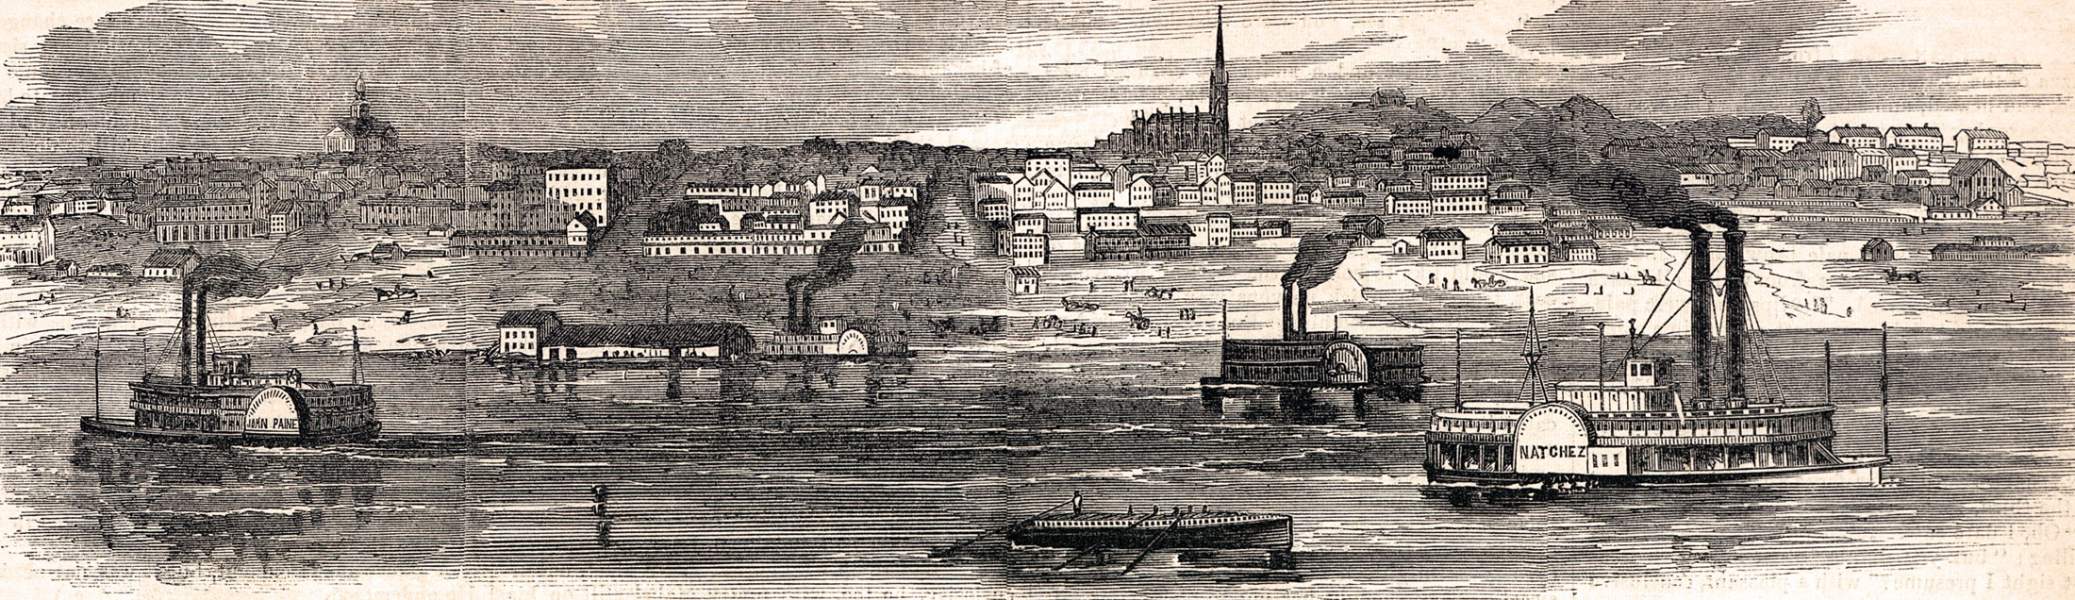 Vicksburg, Mississippi, pre-Civil War, artist's impression, zoomable image